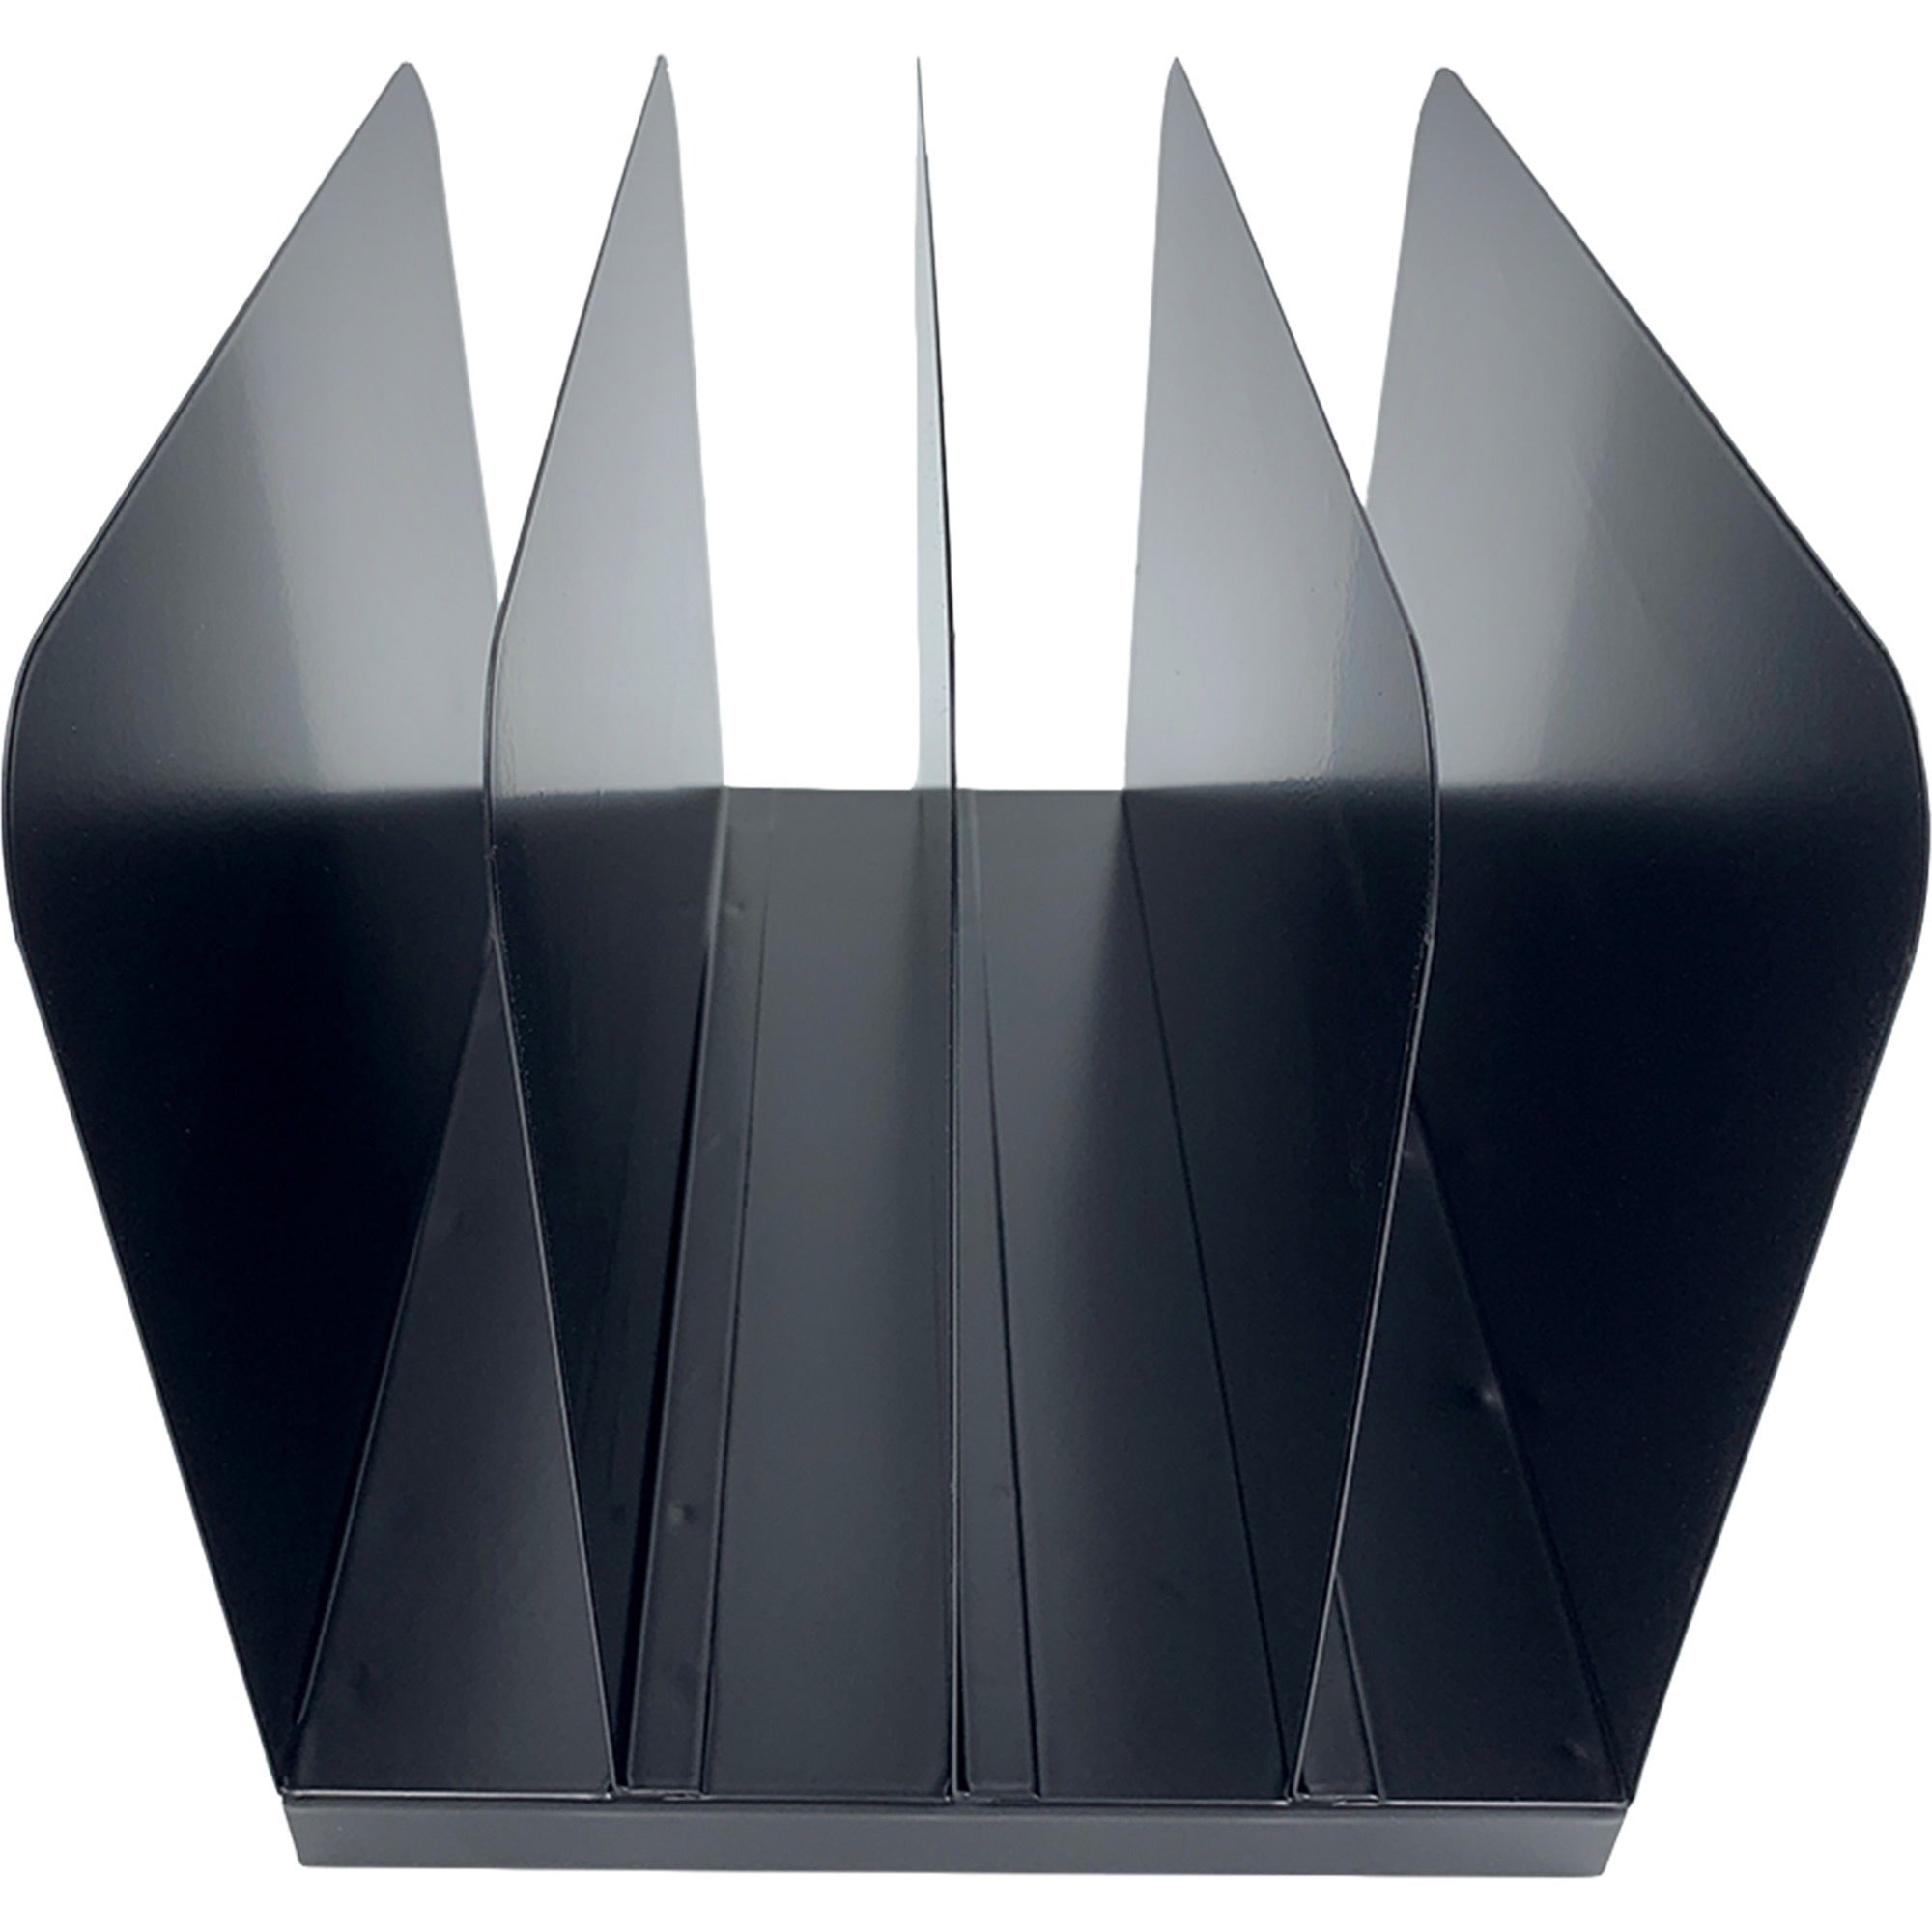 huron-vertical-desk-organizer-4-compartments-vertical-78-height-x-11-width-x-11-depth-durable-black-steel-1-each_hurhasz0147 - 2